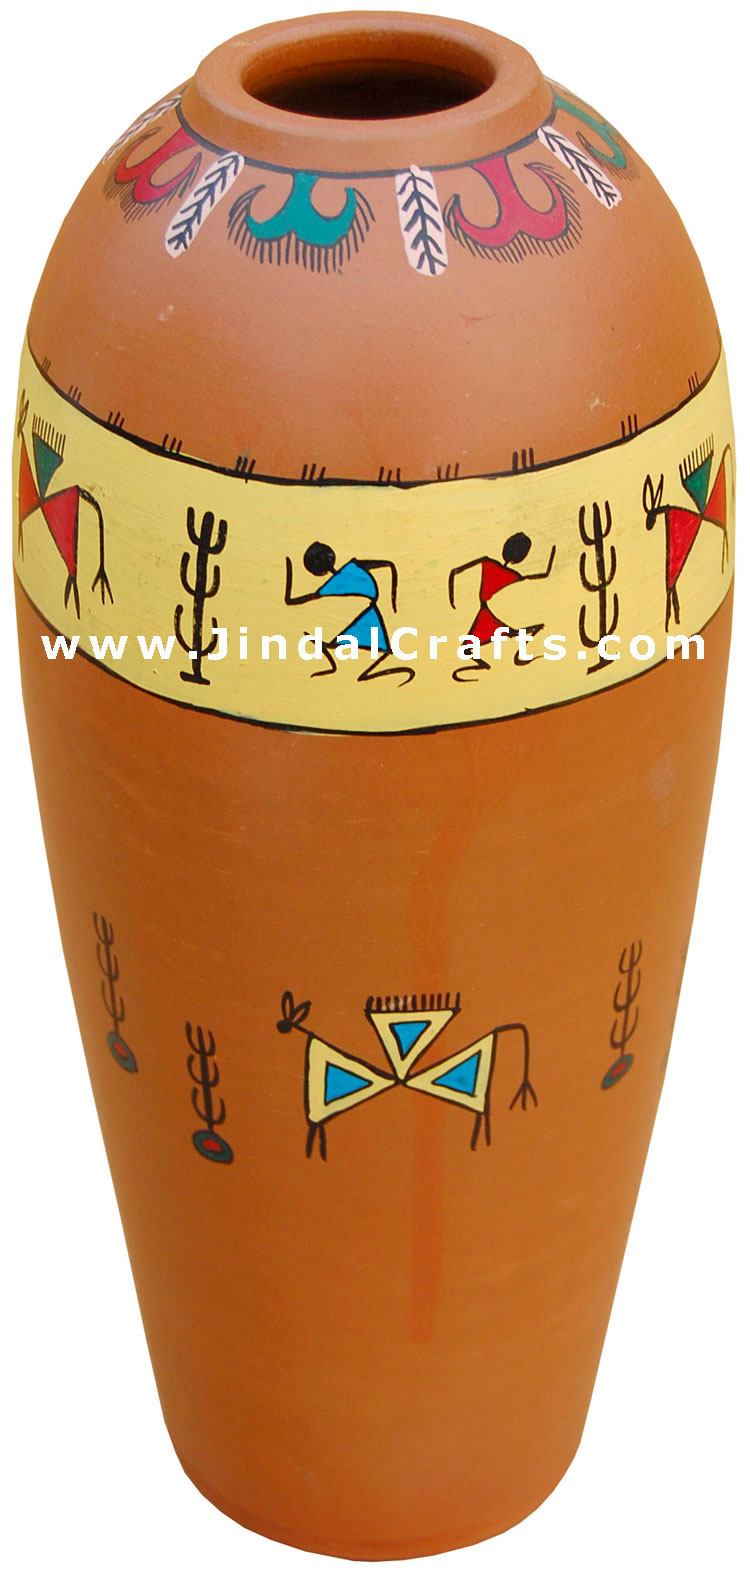 Vase Handmade Hand Painted Artifact from India Heritage